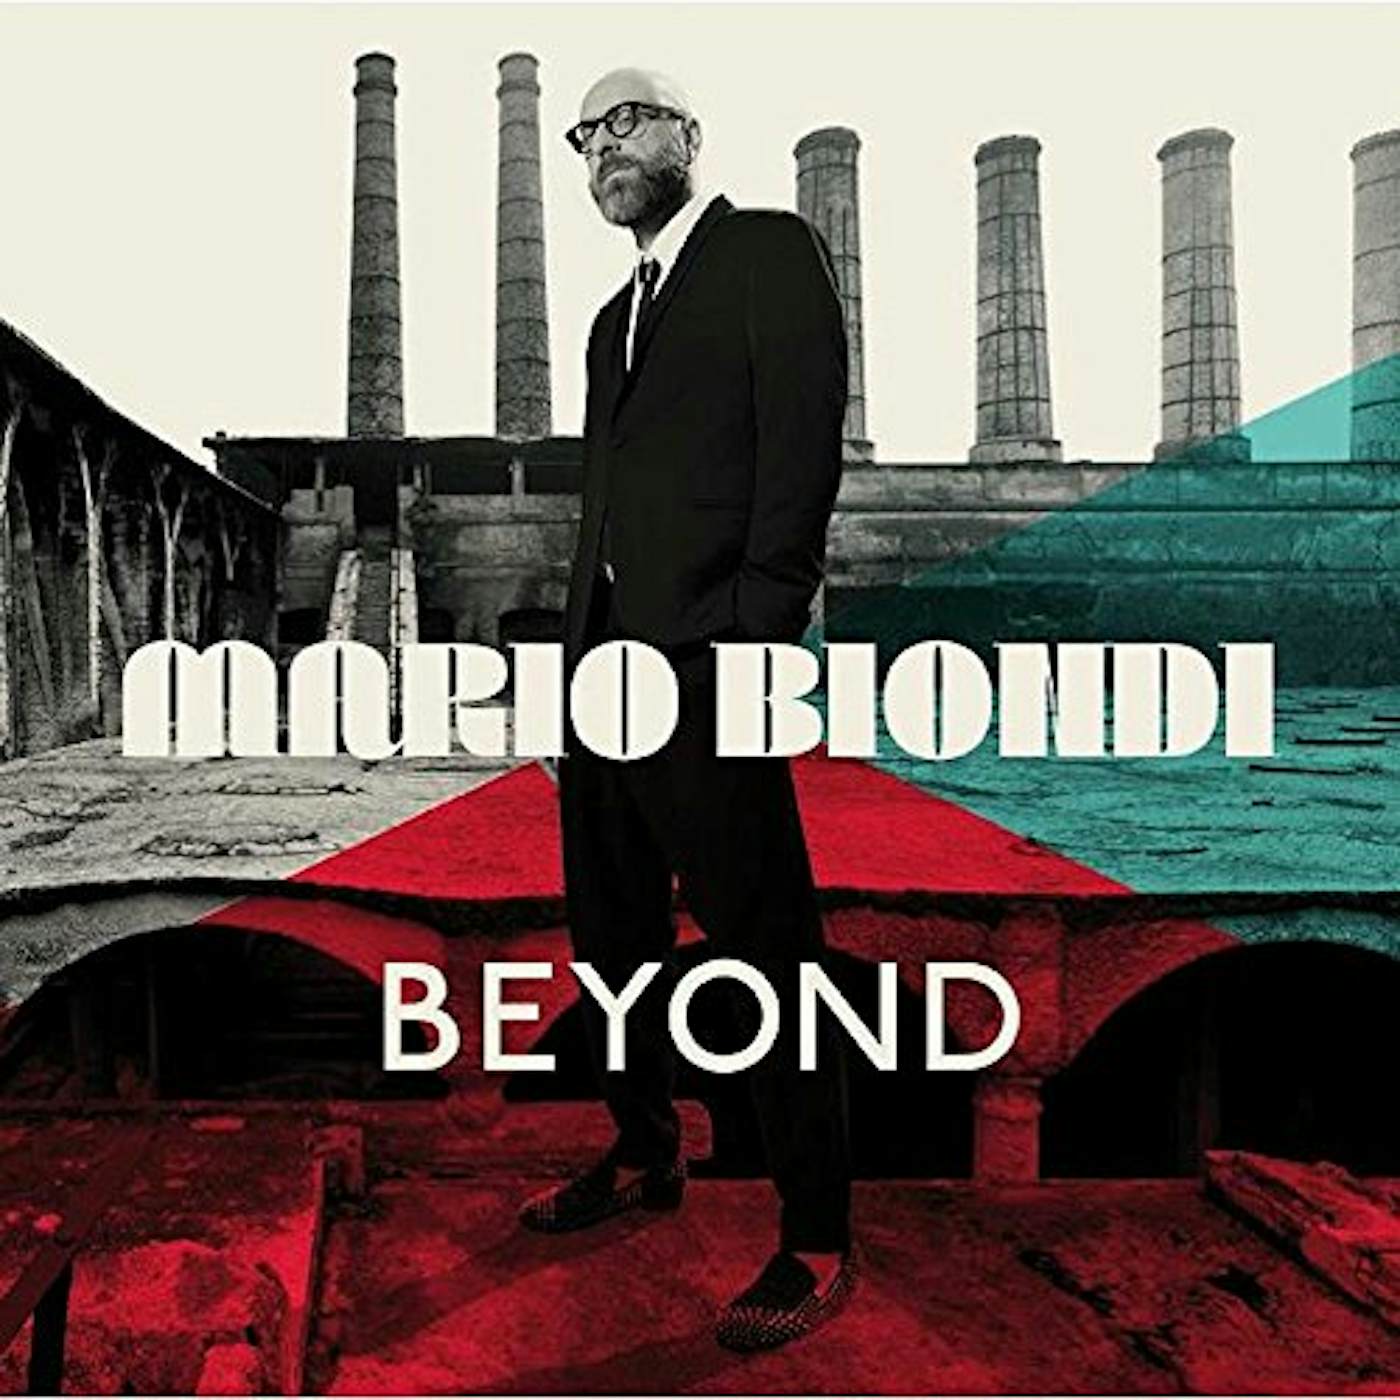 Mario Biondi BEYOND Vinyl Record